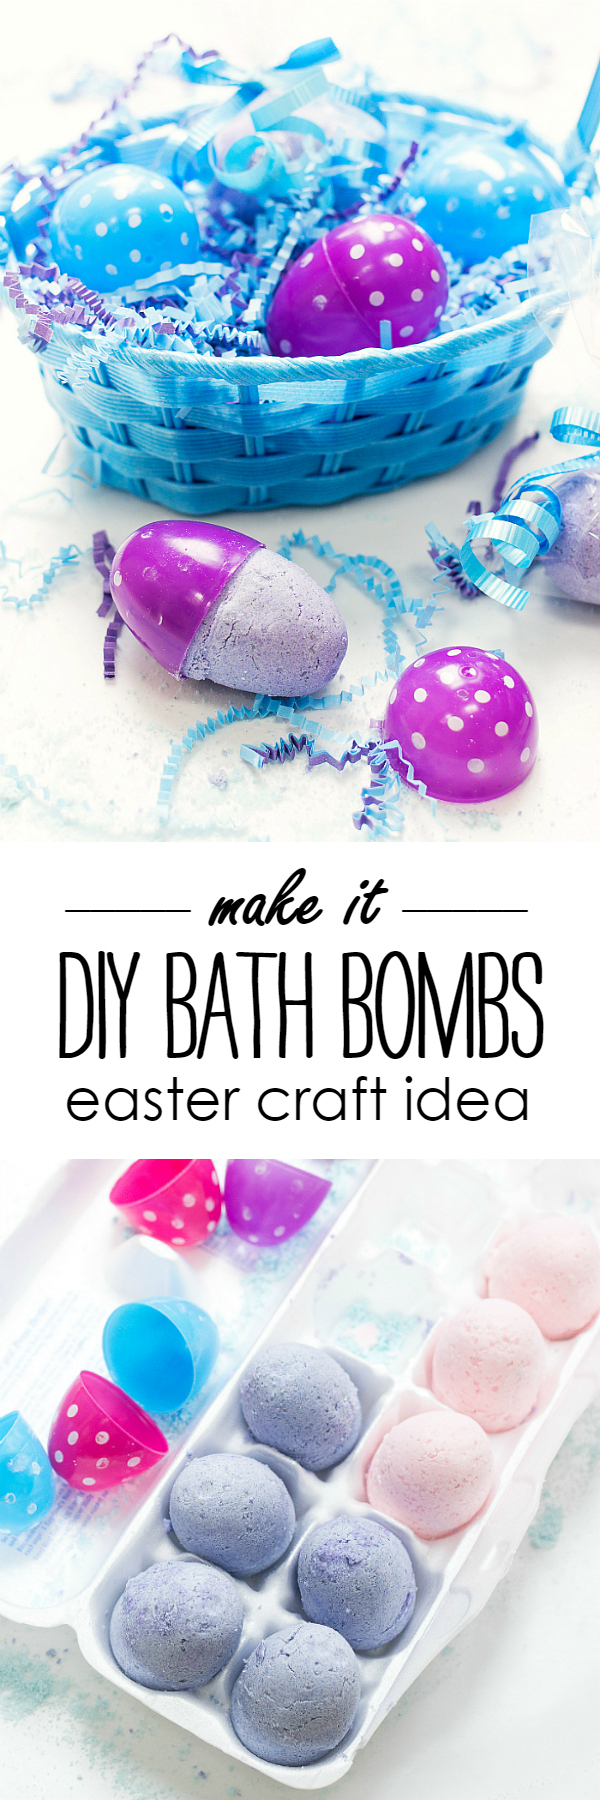 How to Make Bath Bombs - DIY Bath Bomb Recipe and Instructions @ItAllStartedWithPaint.com